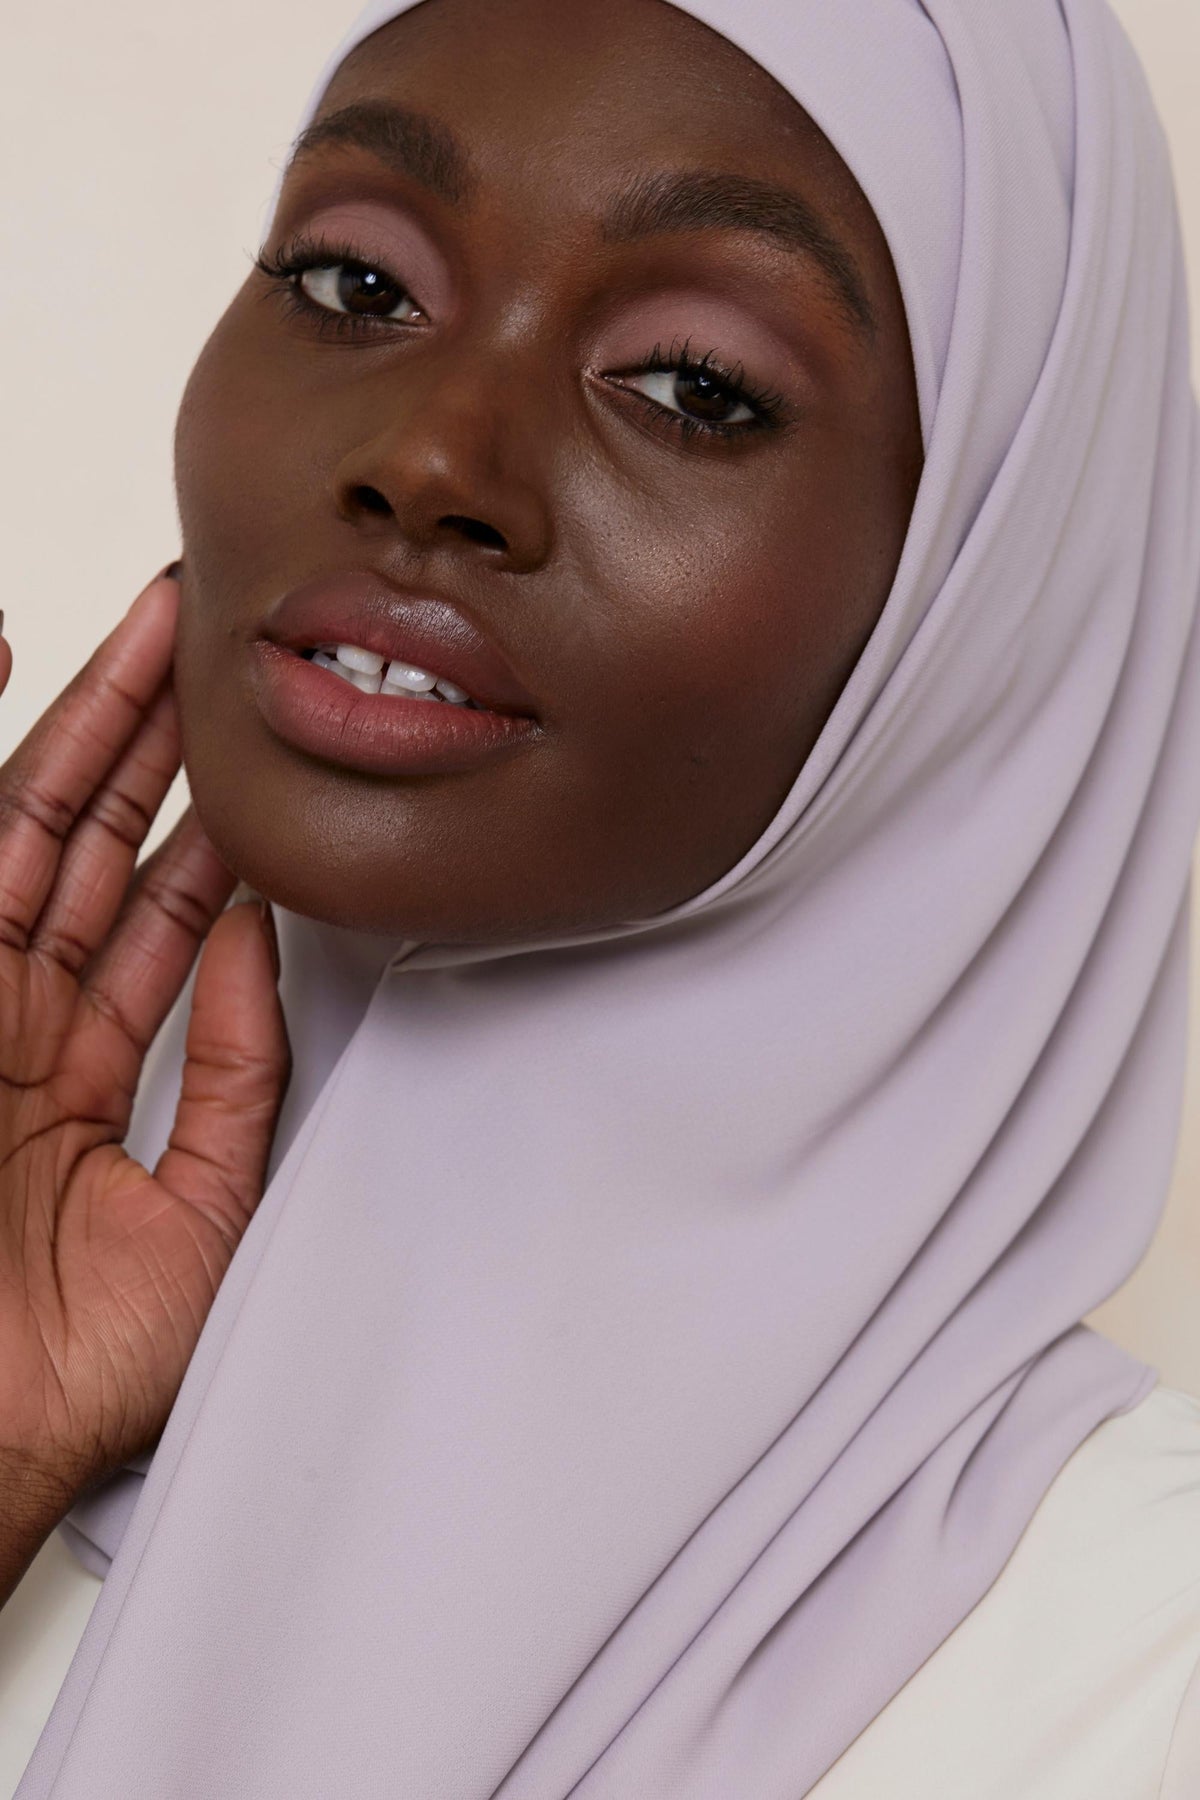 Premium Chiffon Hijab - London saigonodysseyhotel 